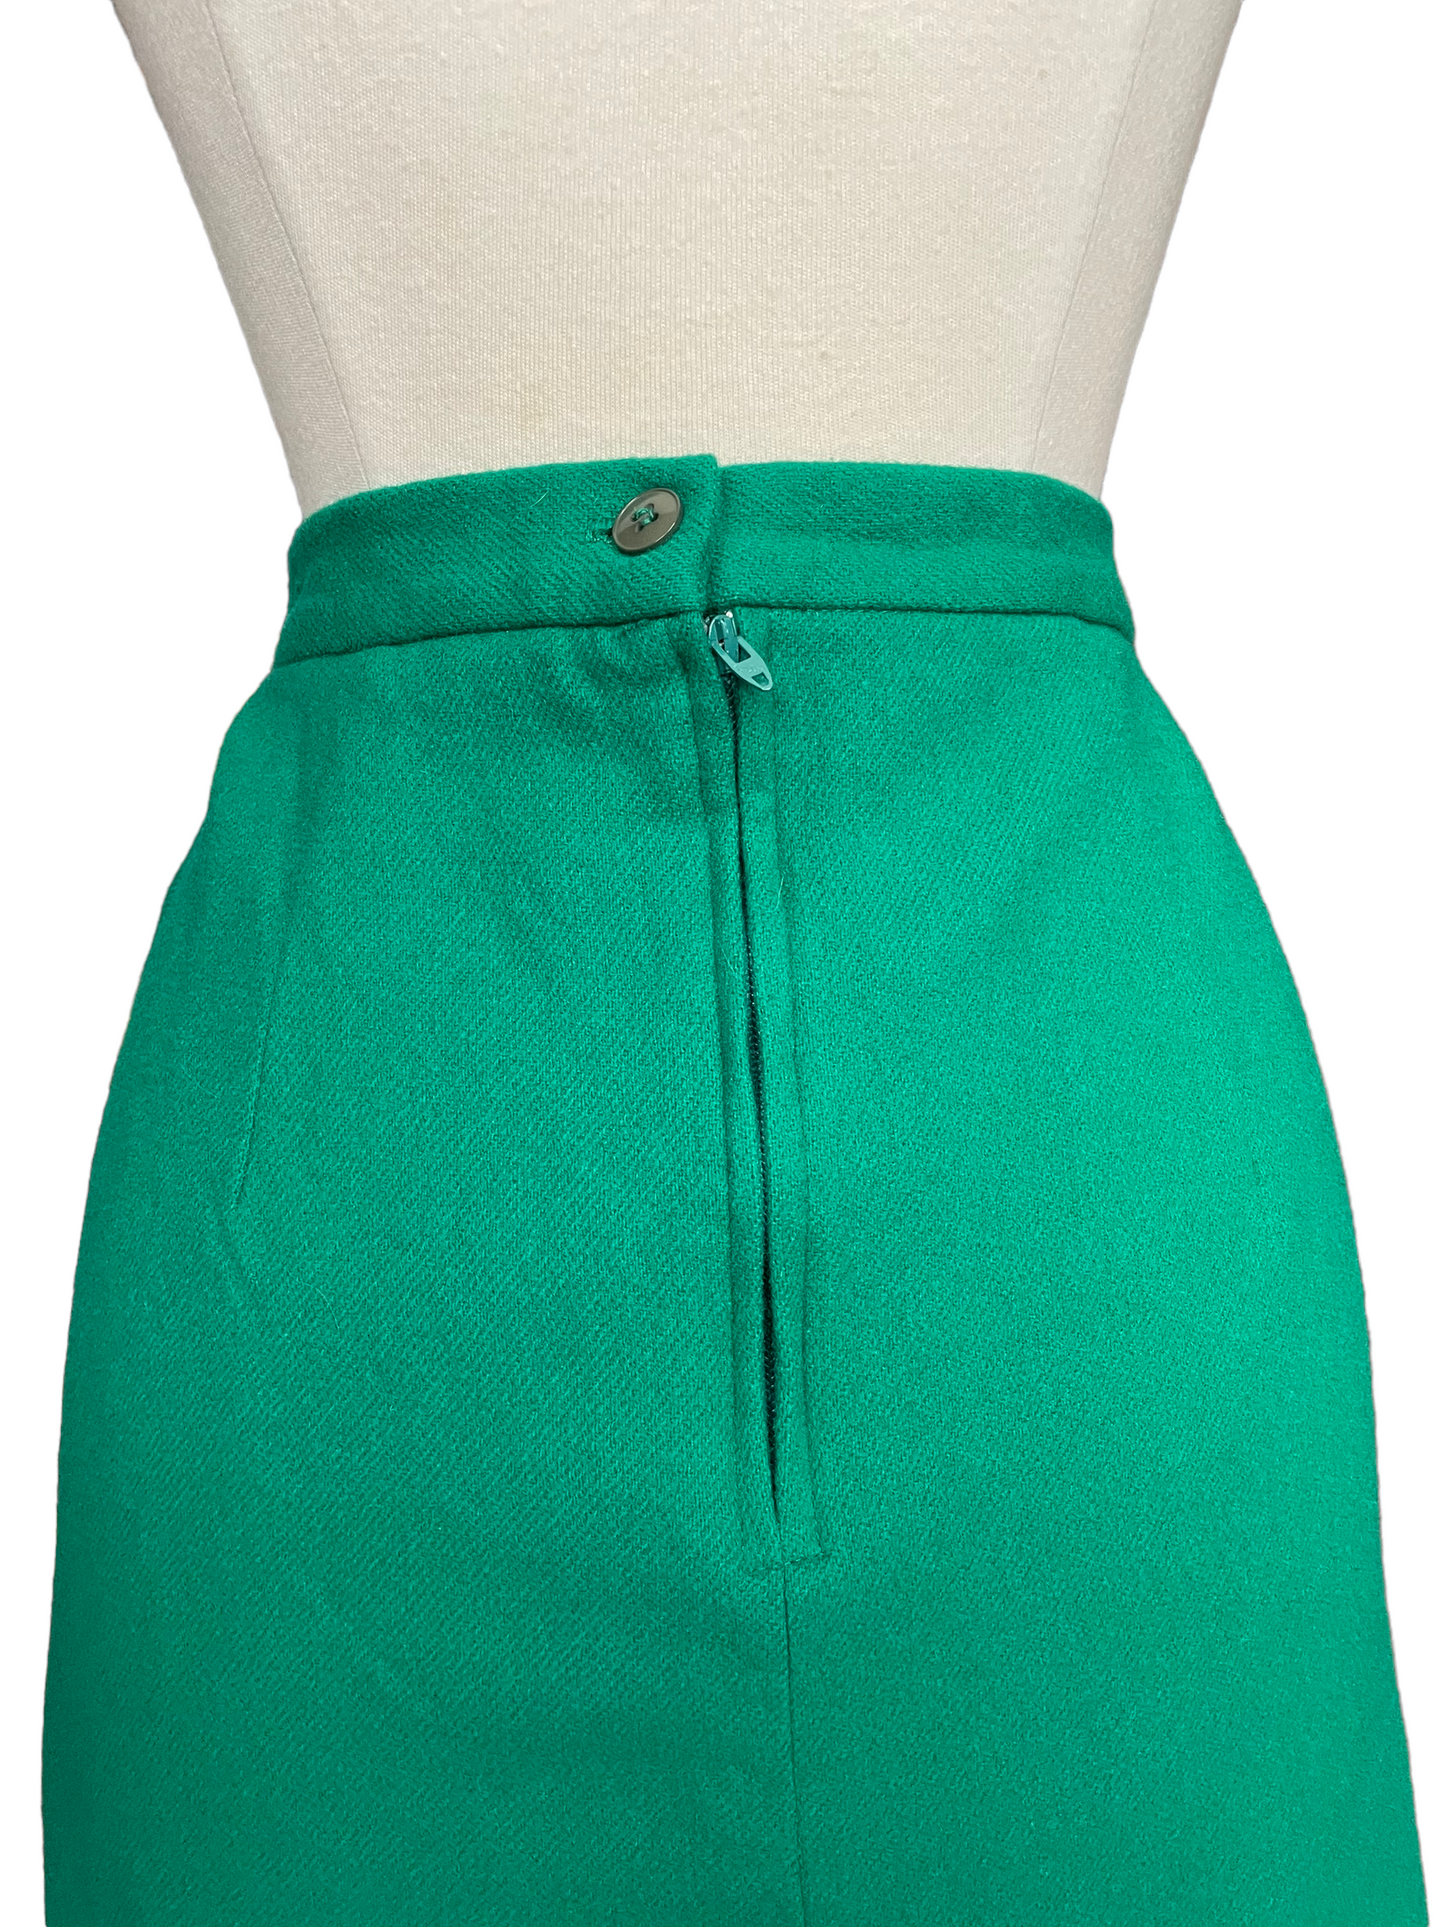 Back waist view of Vintage 1960s Green Wool Pencil Skirt | Barn Owl Vintage | Seattle Vintage Skirts